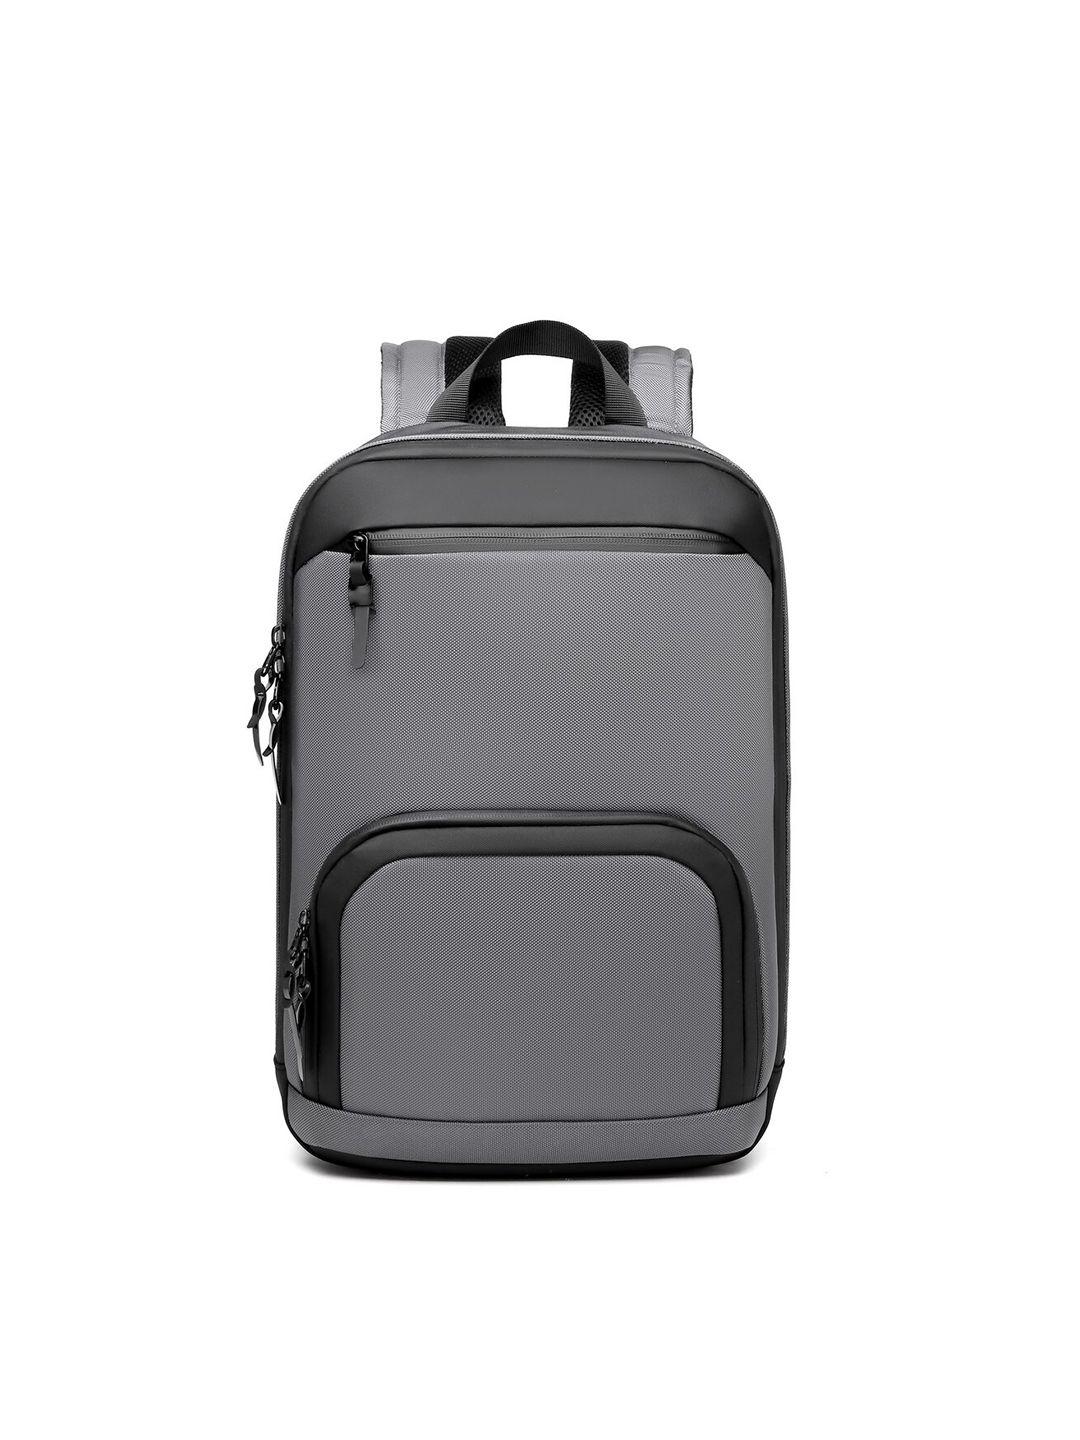 ozuko 9474 range textured soft one size core backpack